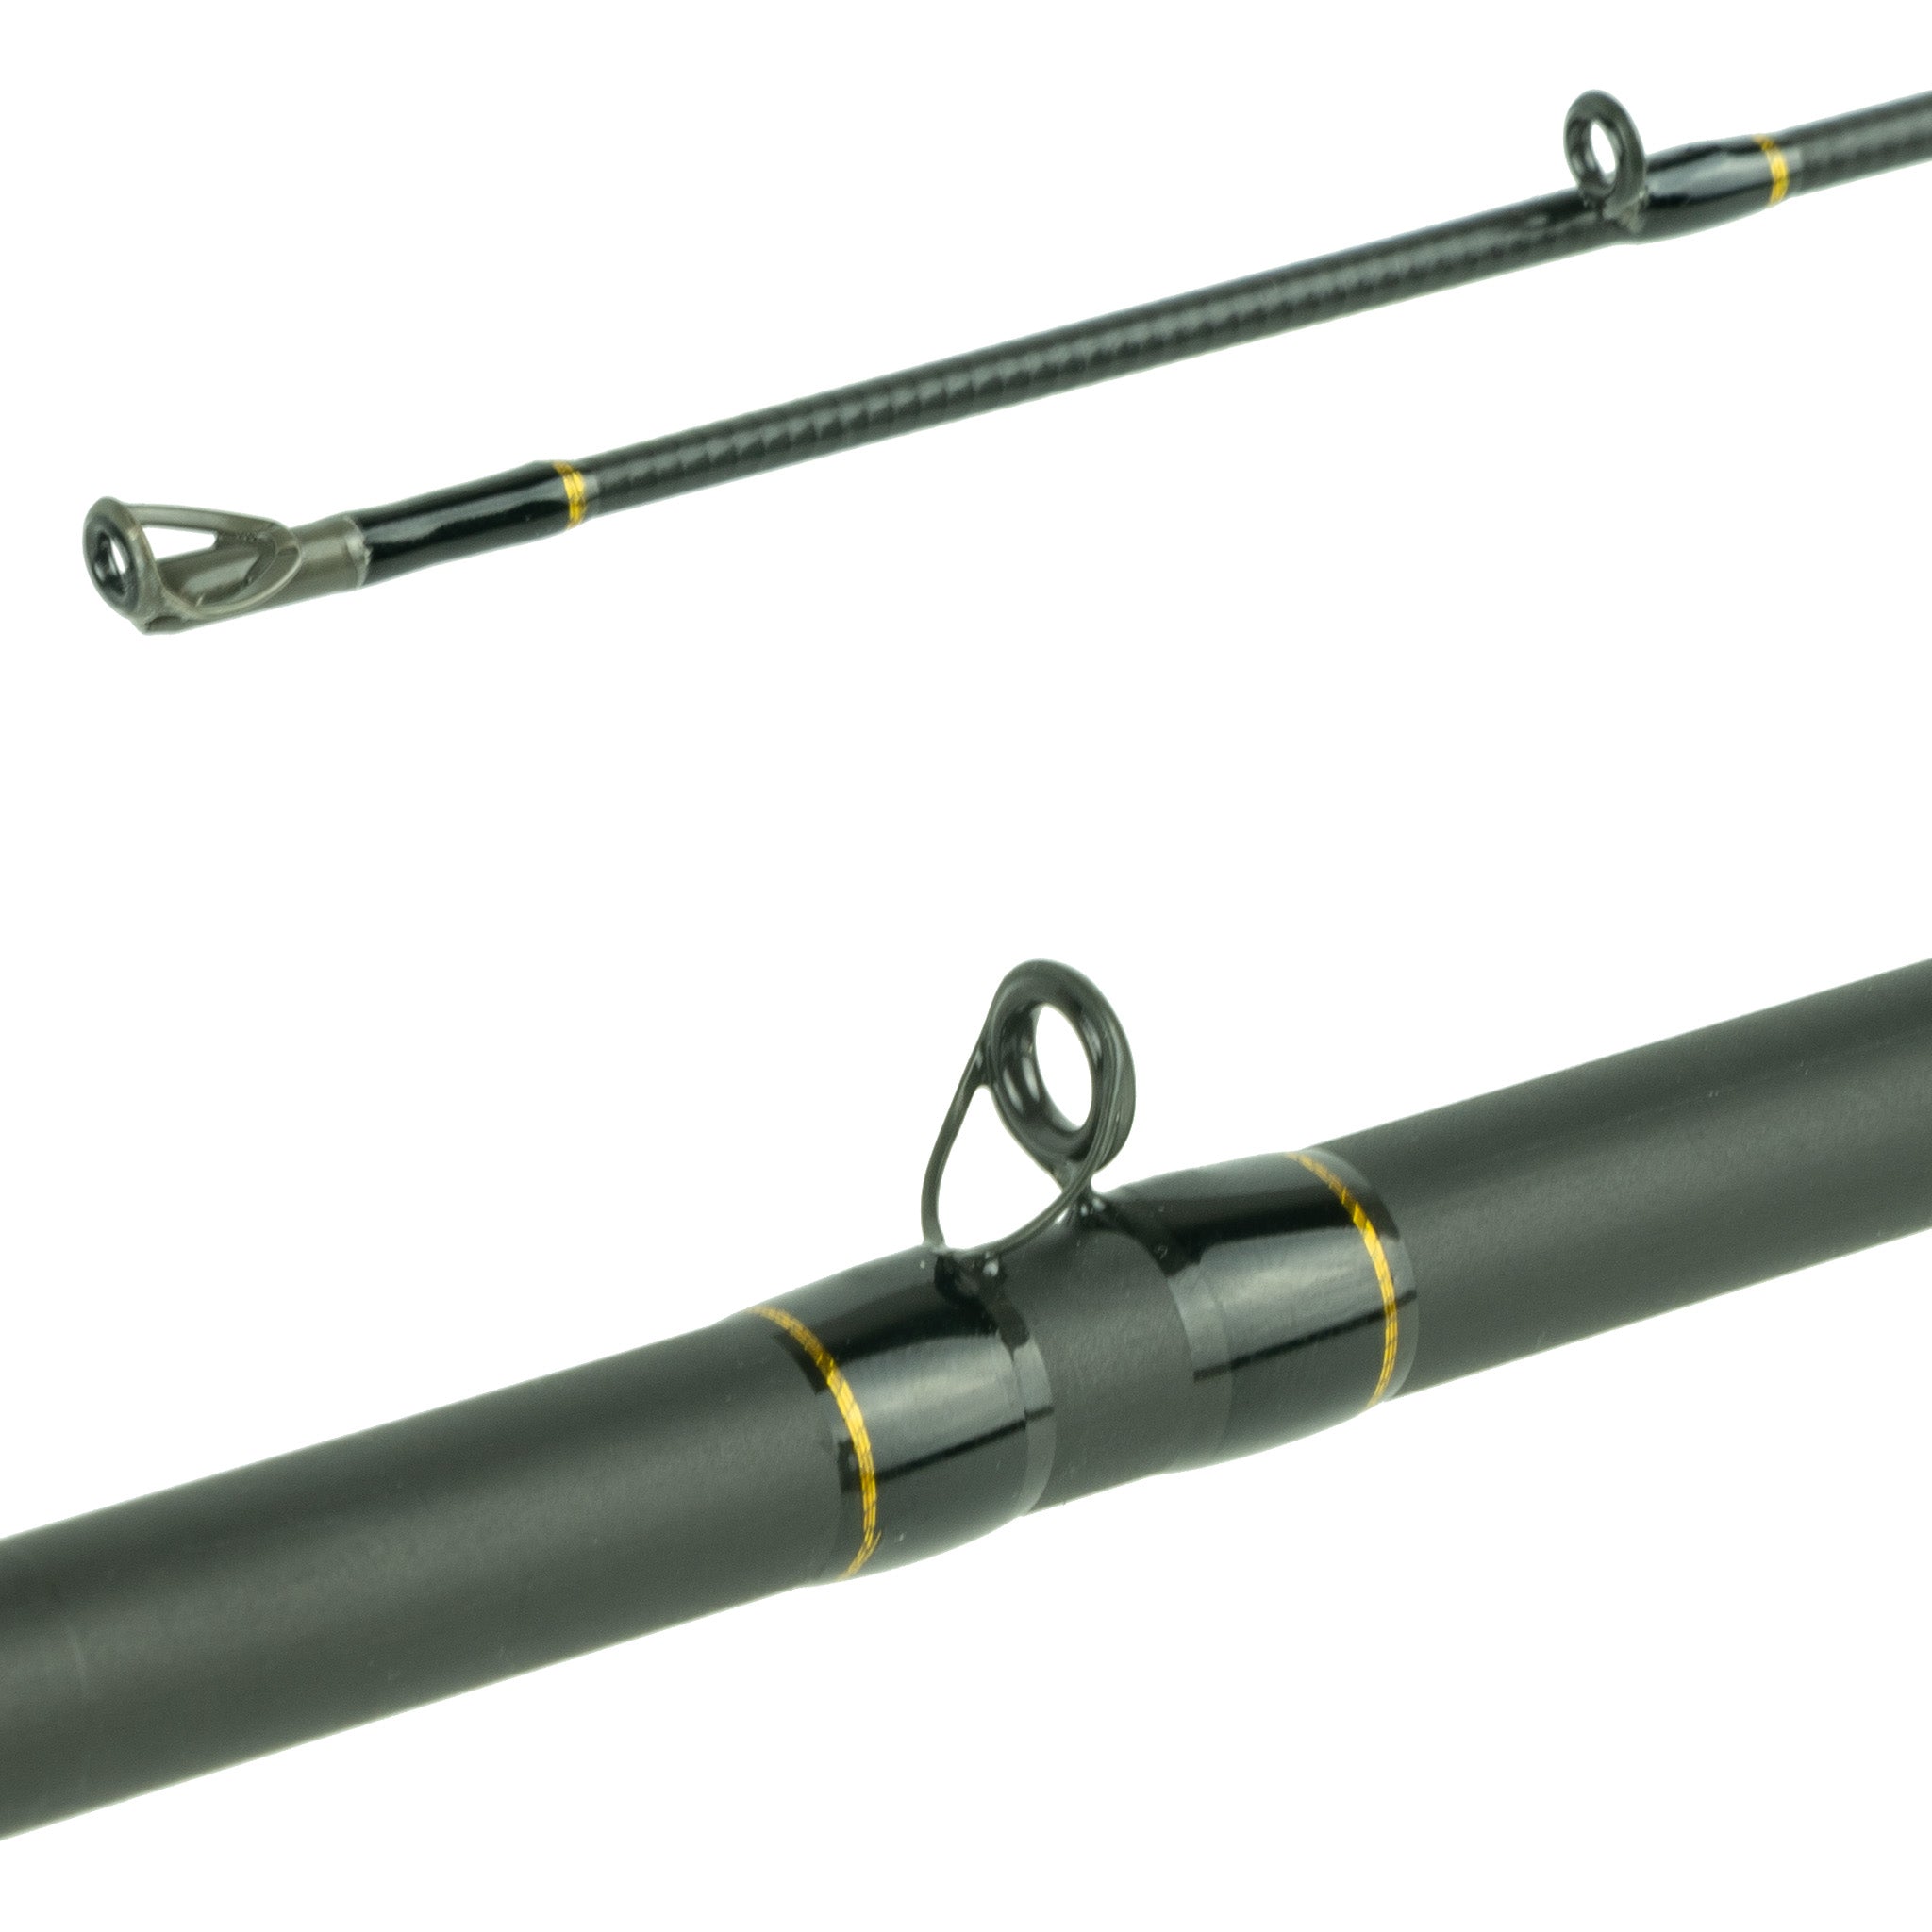 Vega Series Casting Rod - 6'10 Heavy, Mod-Fast - 6th Sense Fishing